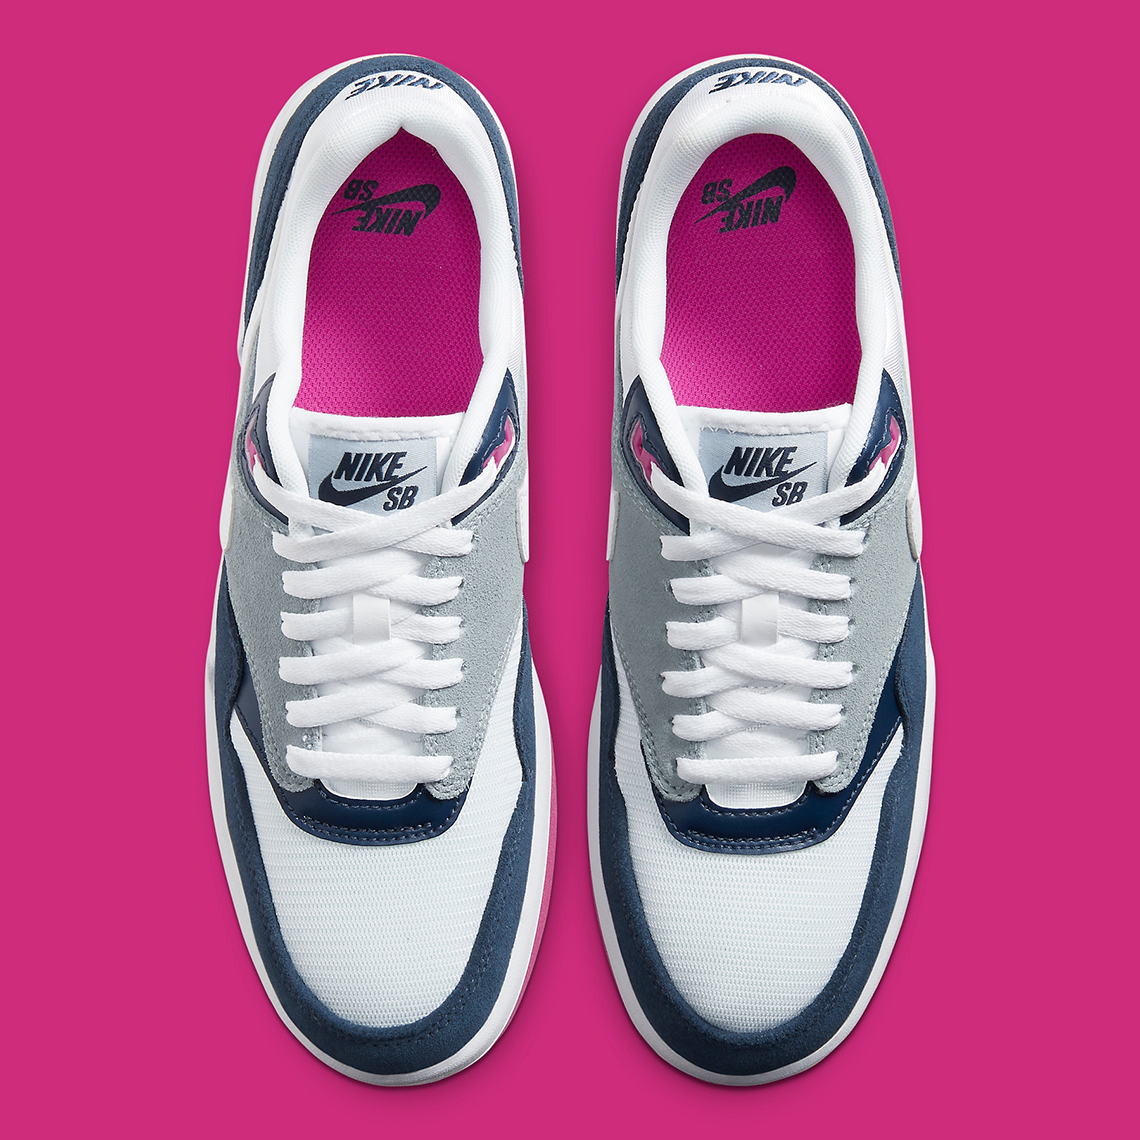 Nike Sb Gts Navy Pink Cd4990 401 2